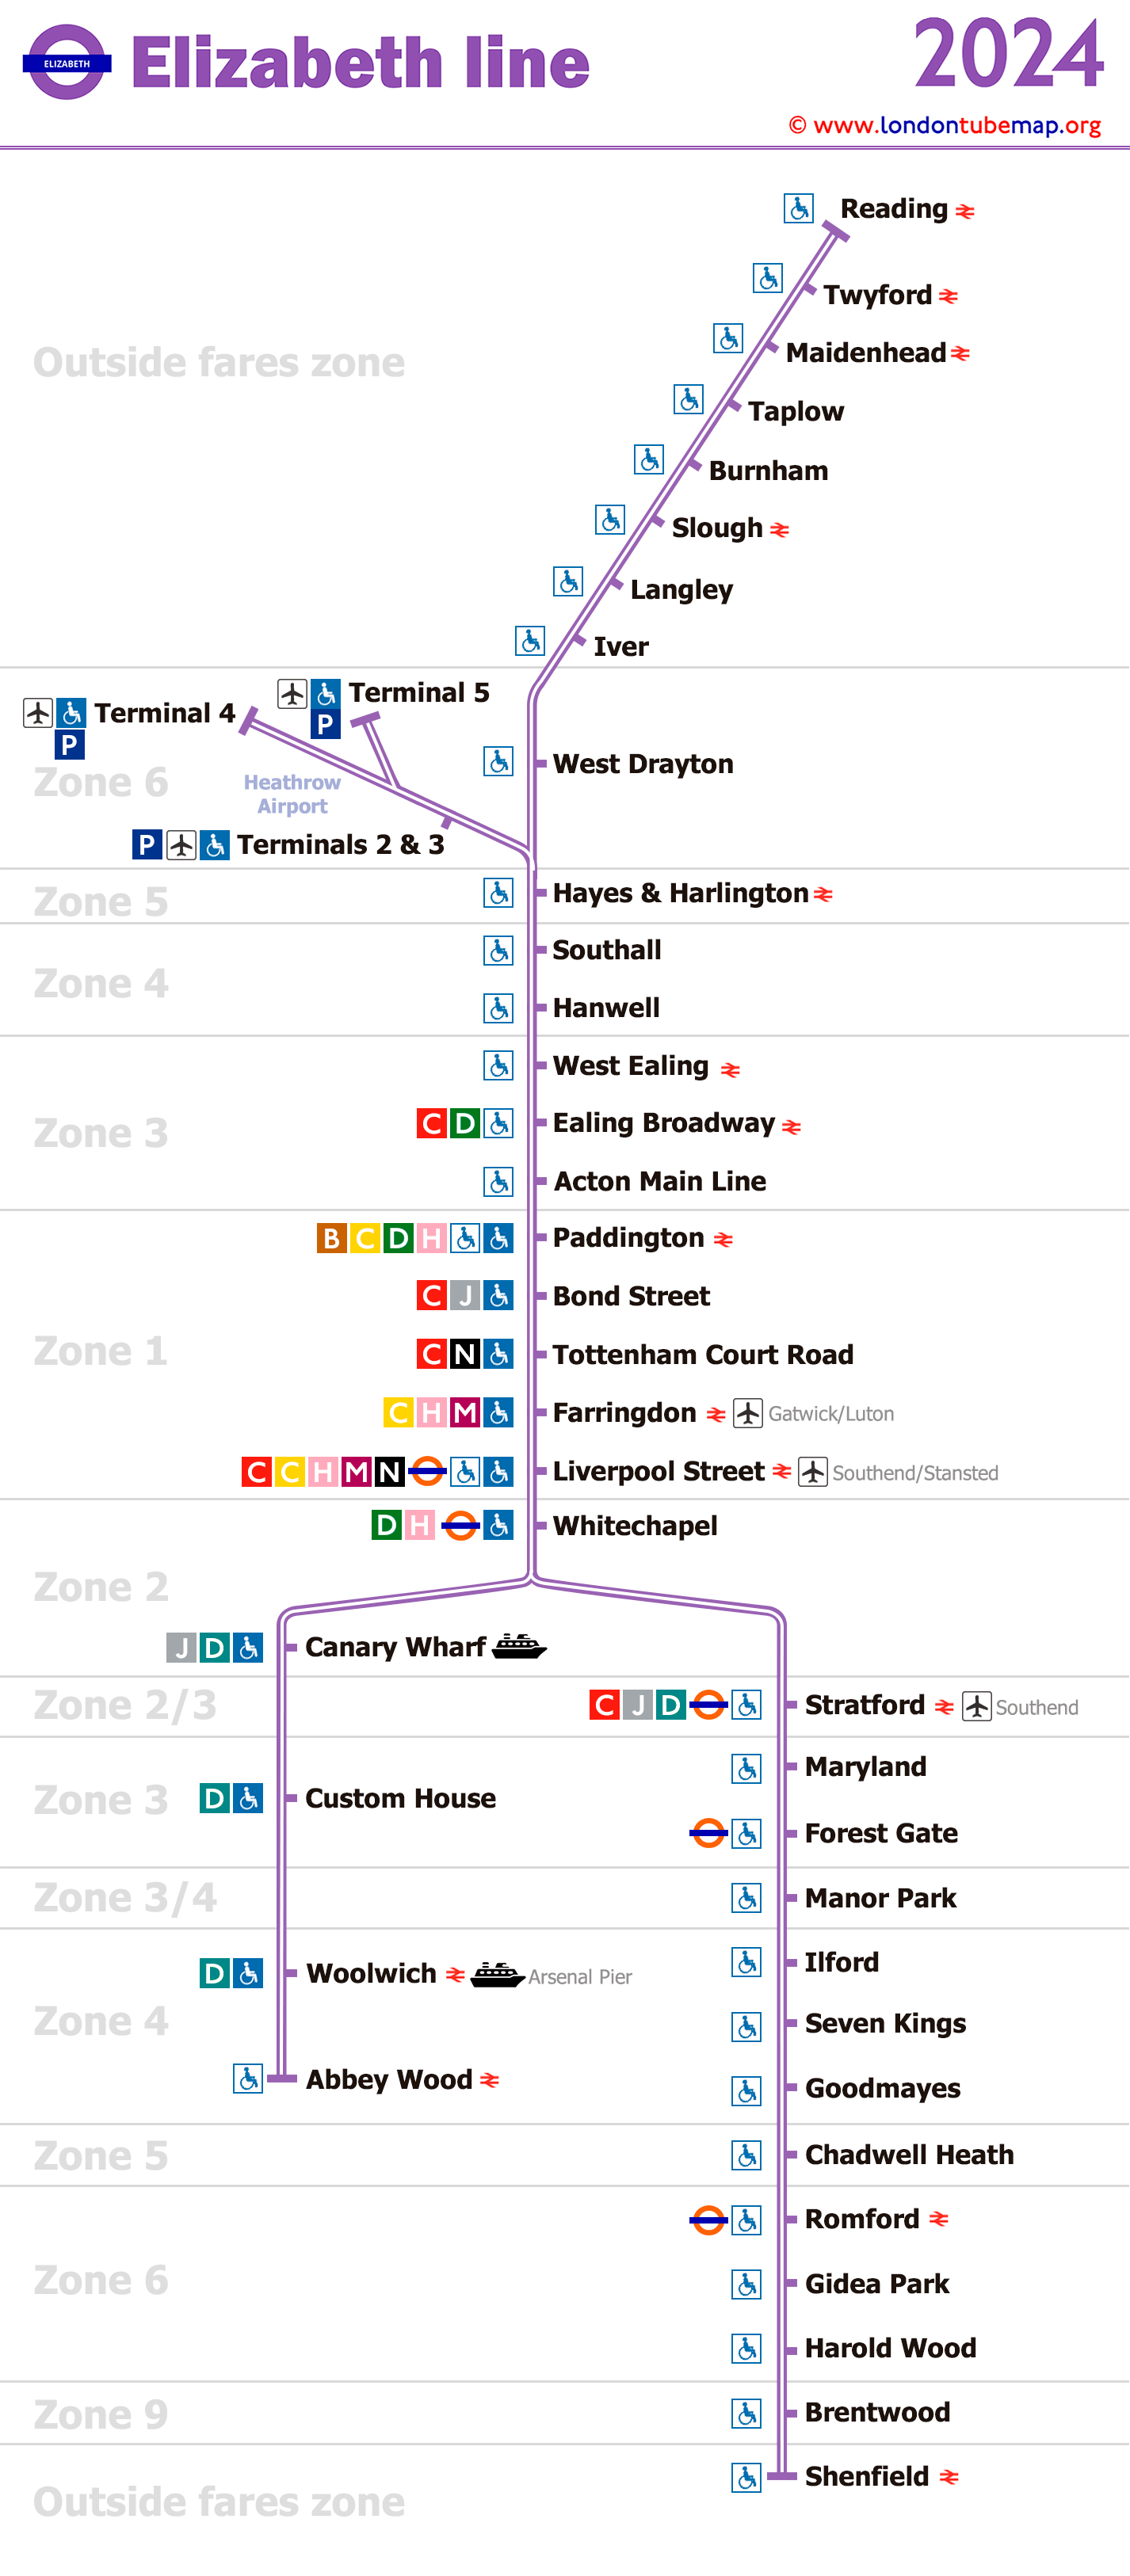 Elizabeth tube line map 2024